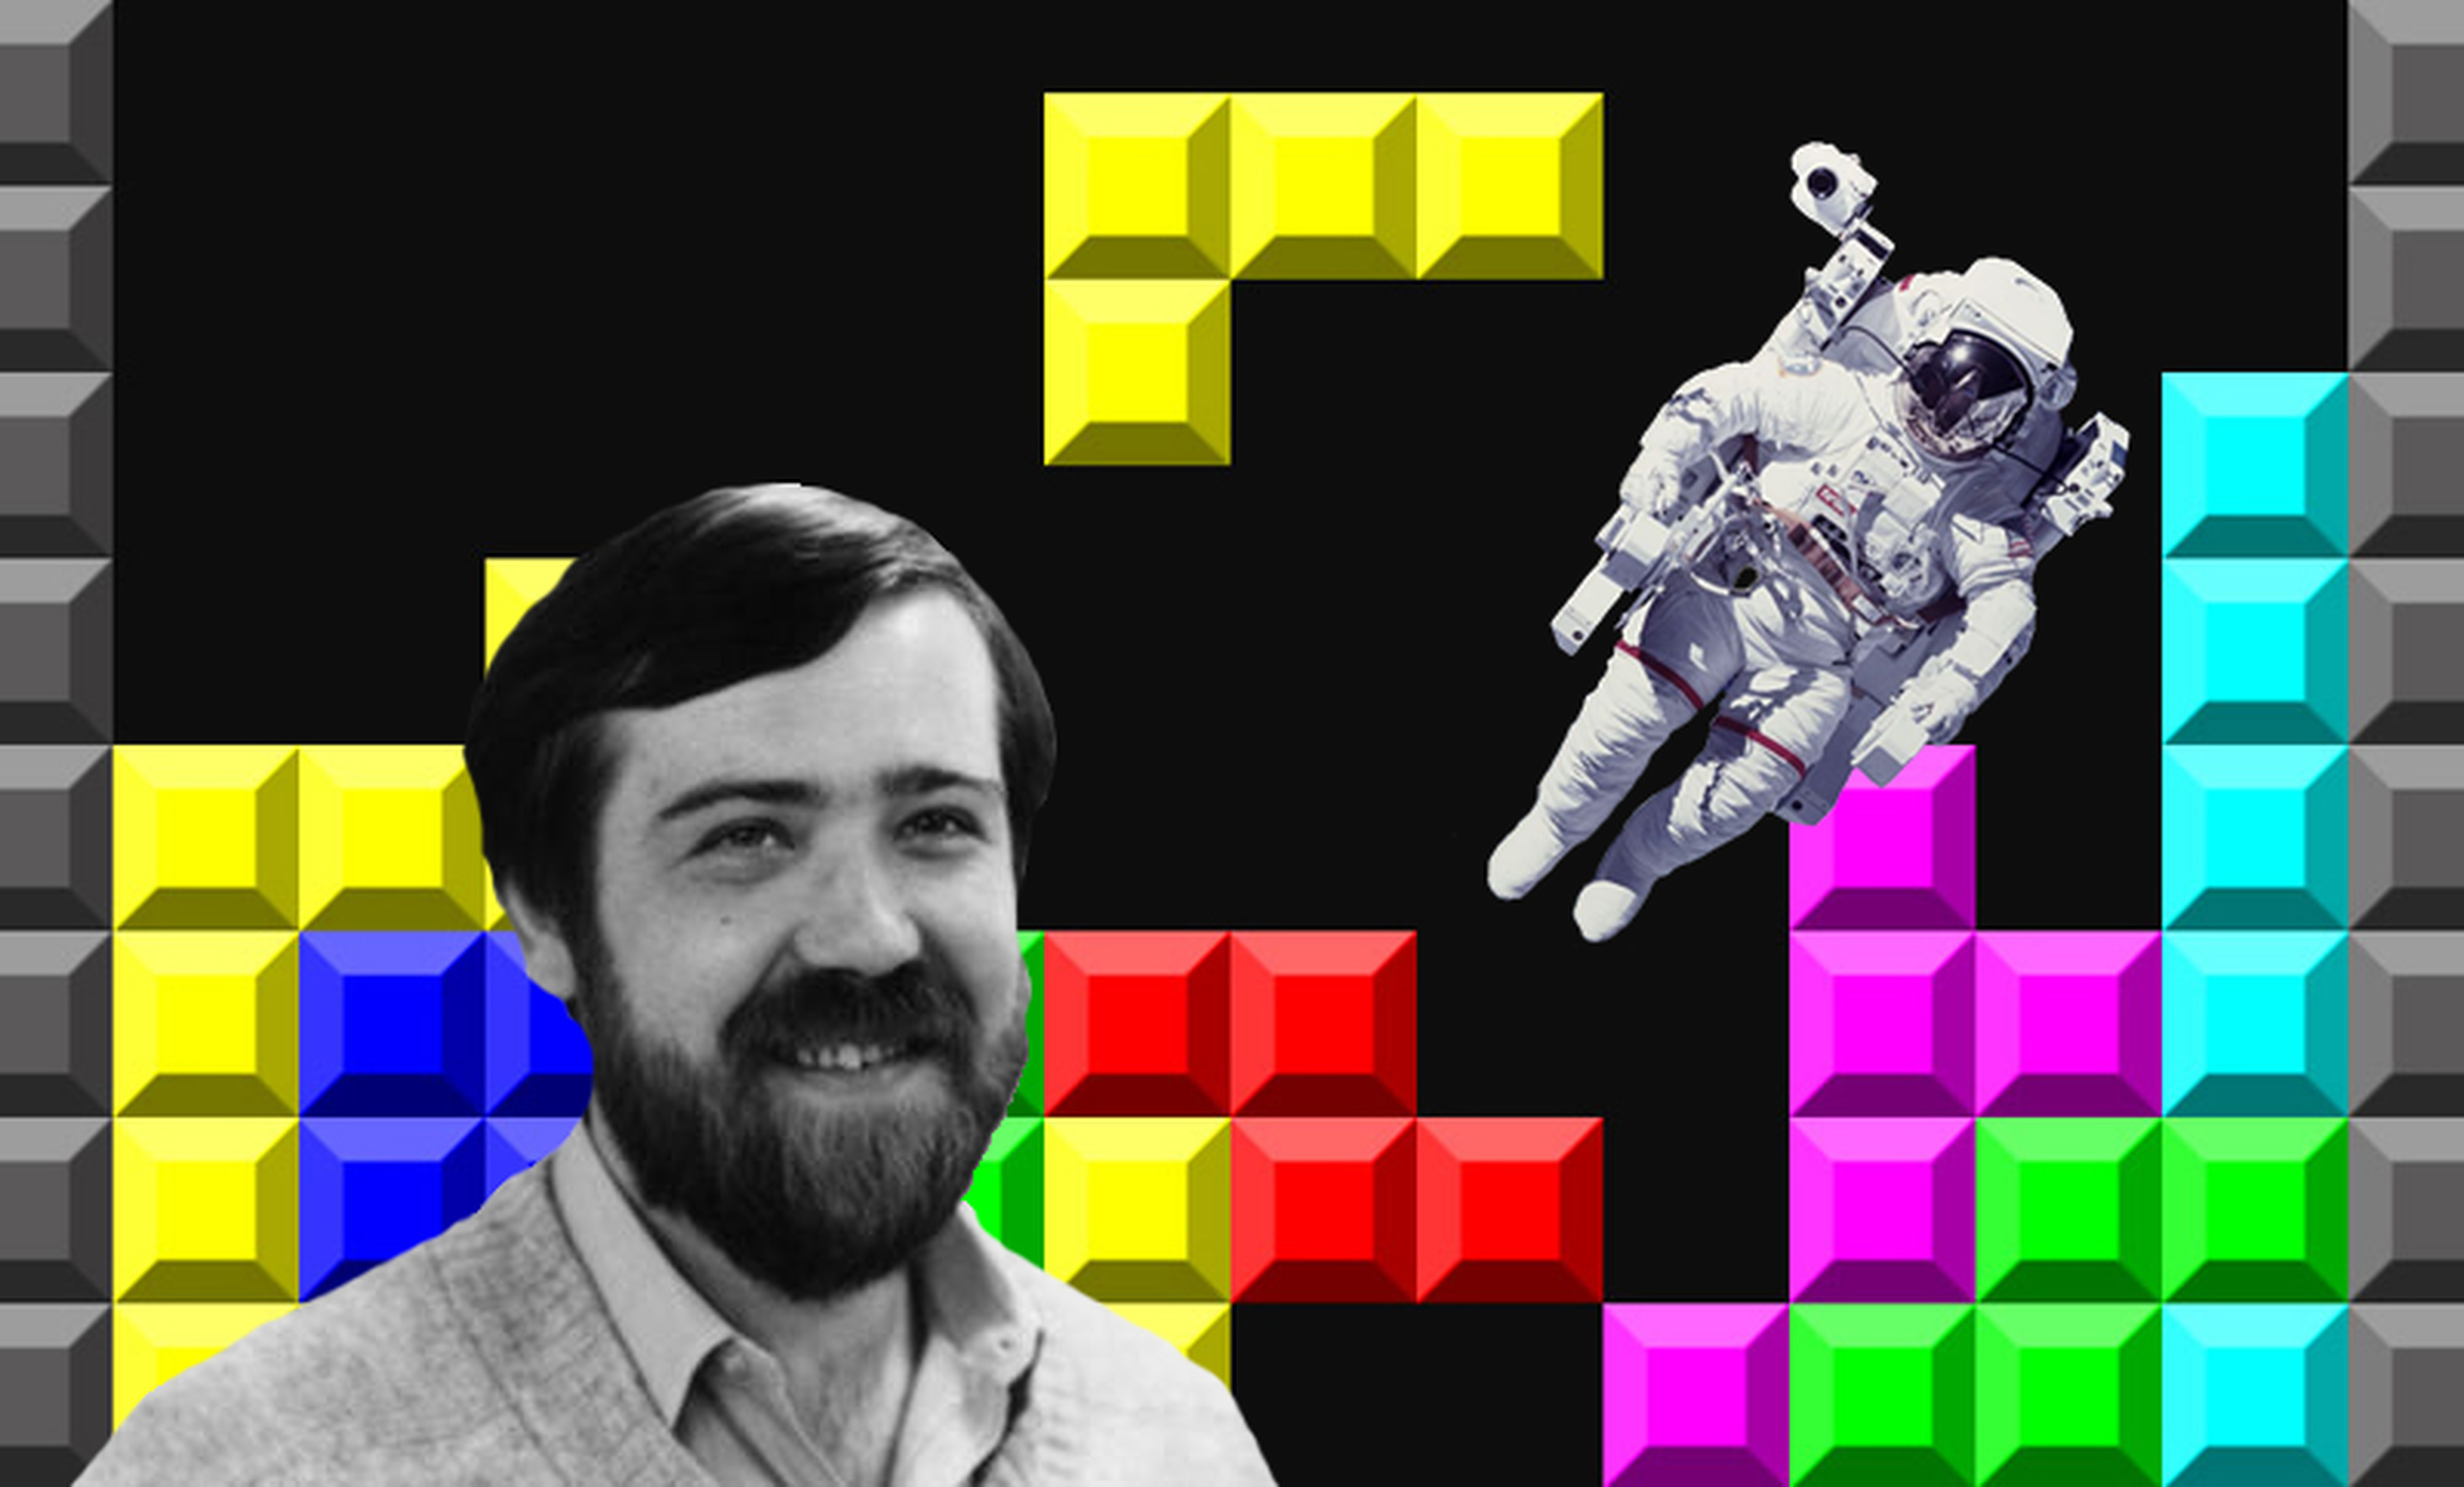 Tetris collage